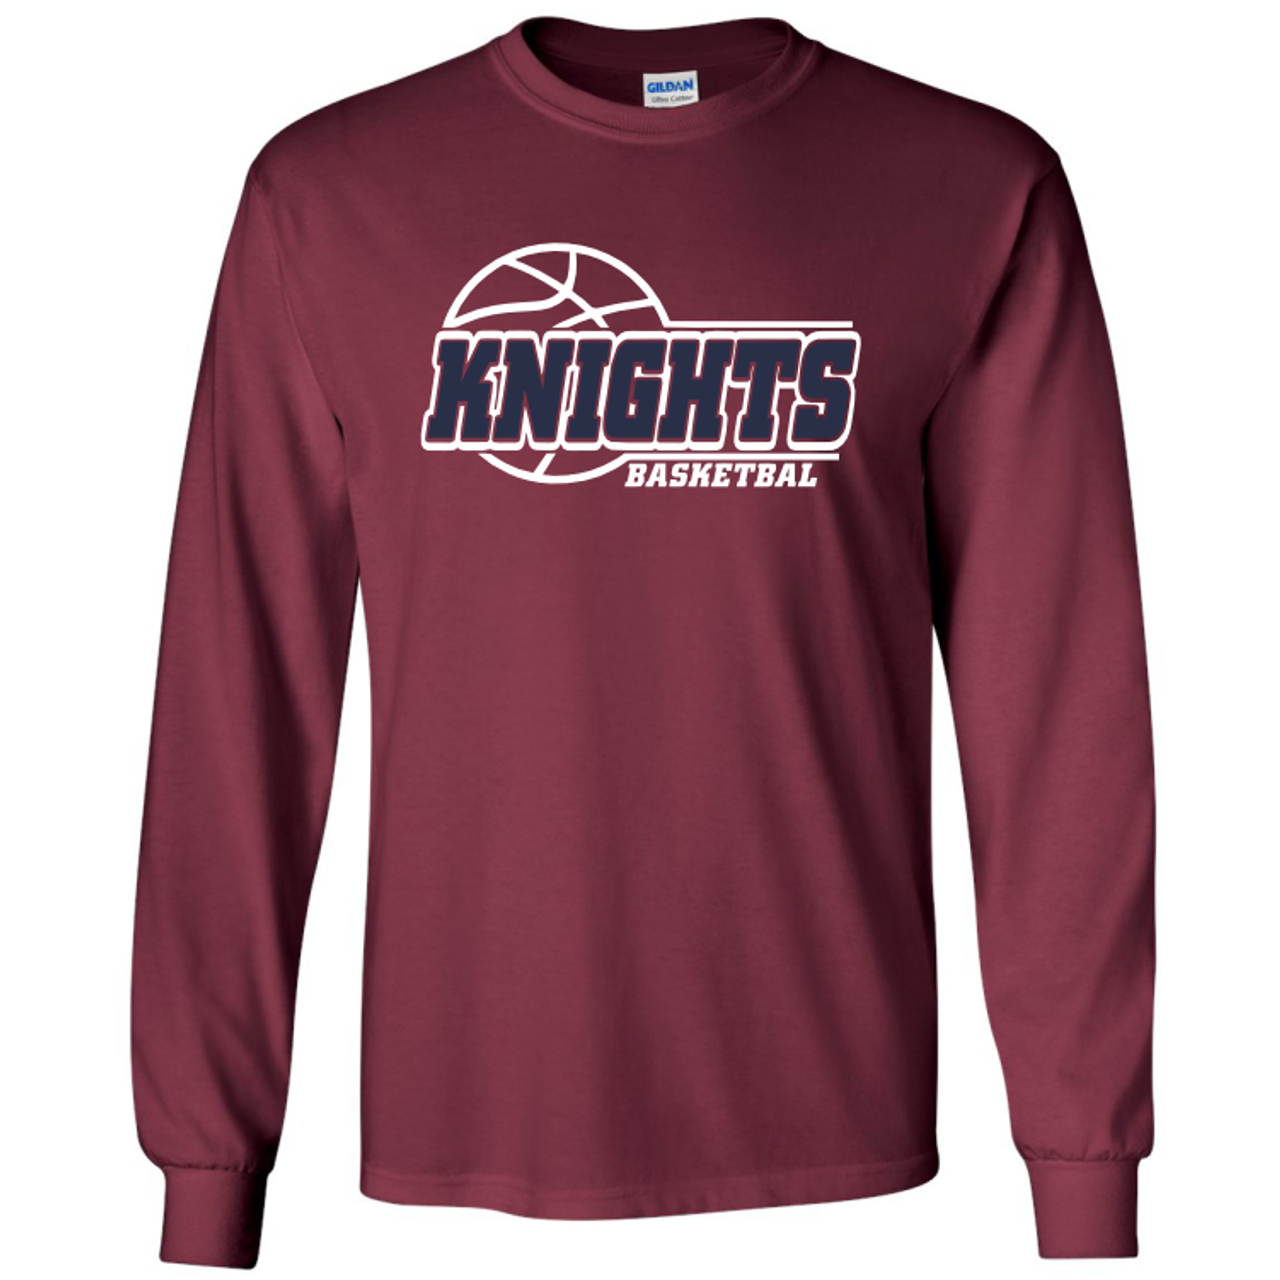 New Covenant Knights Basketball Logo Cotton T-Shirt, Maroon